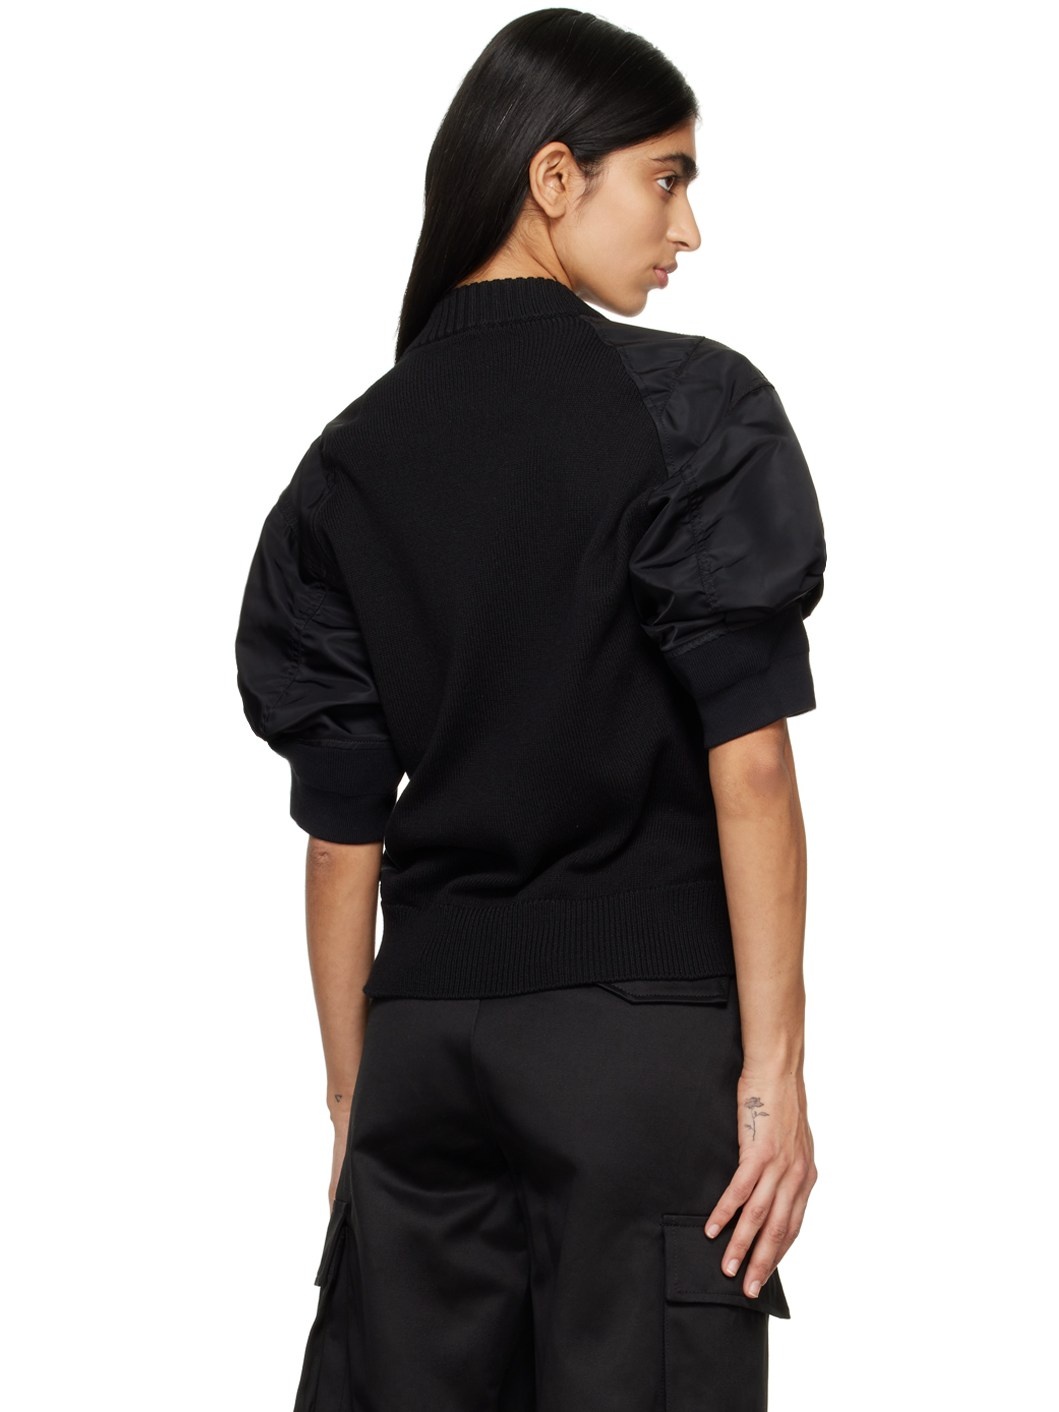 Black Paneled Sweater - 3